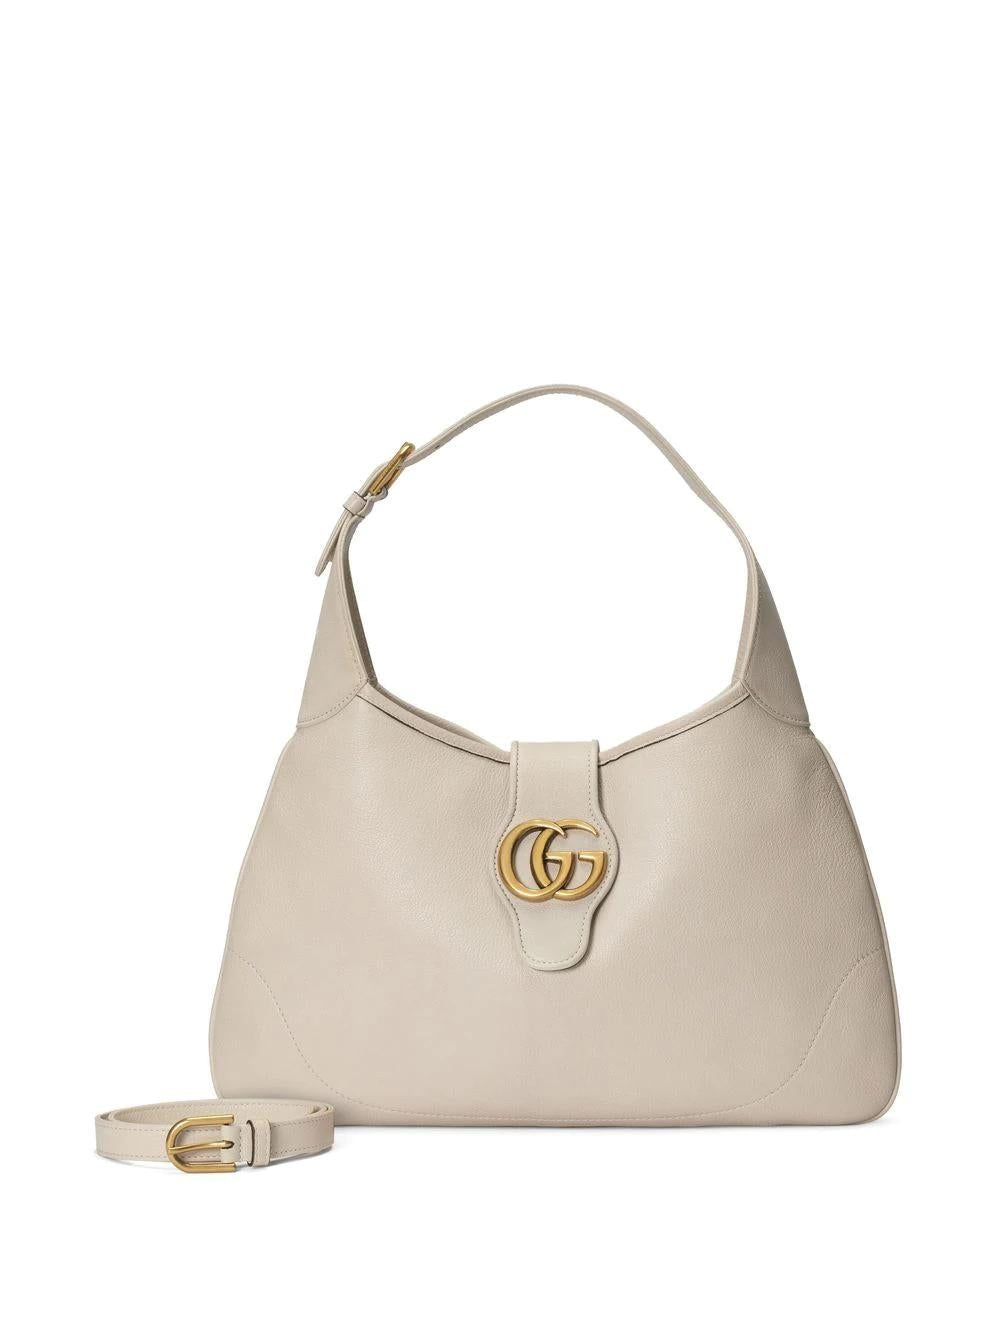 GUCCI Aphrodite Medium Grained Leather Handbag with Gold-Tone Logo, White - Adjustable & Detachable Strap, 38x39x2 cm